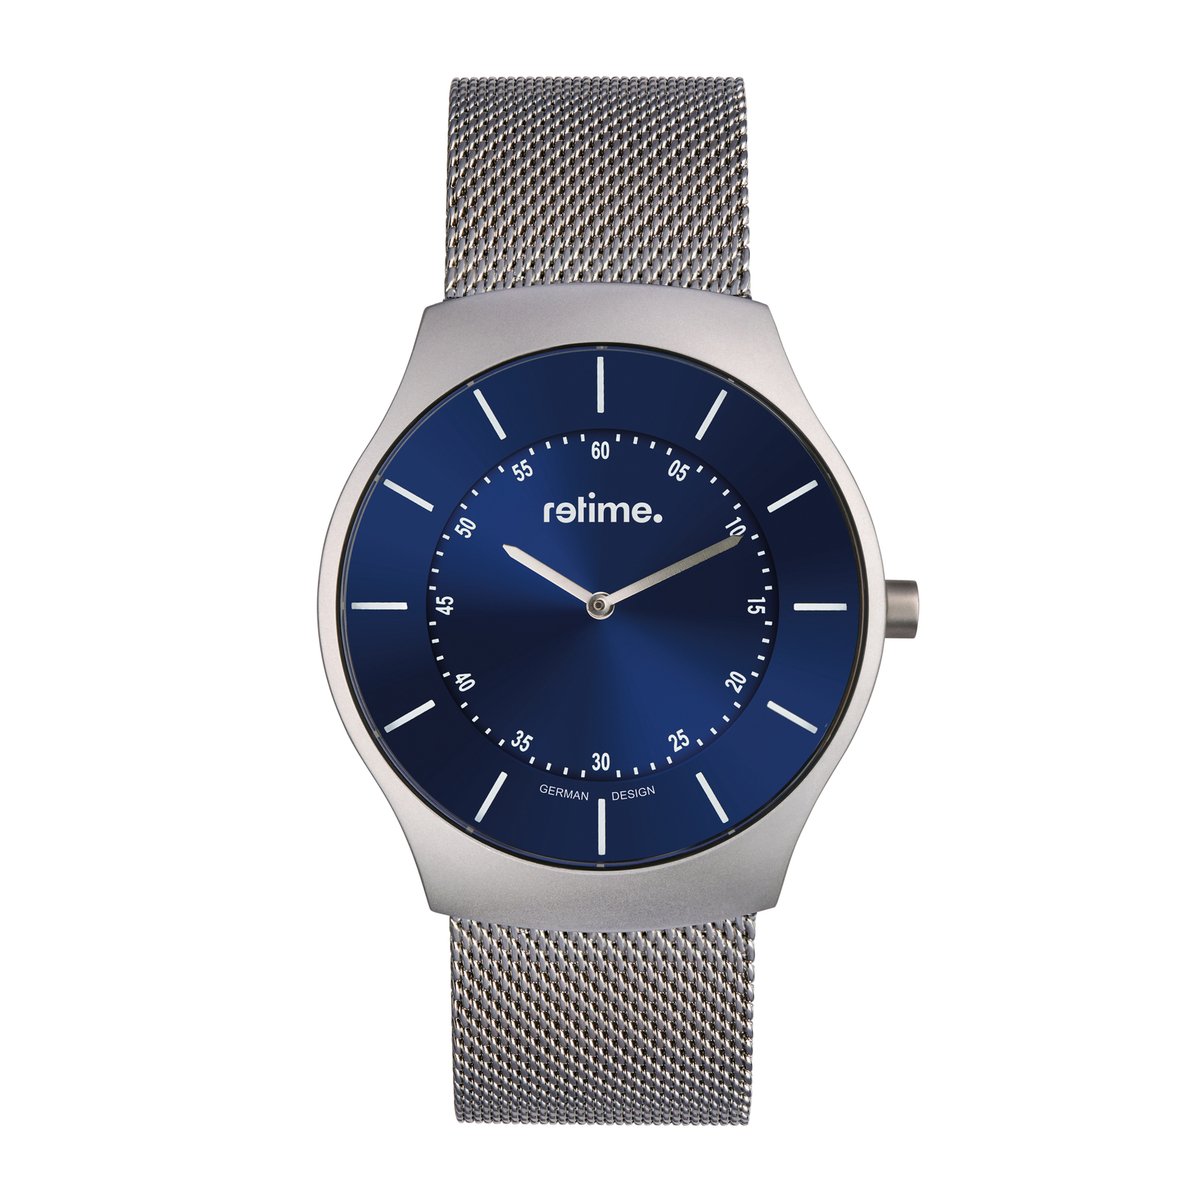 Armbanduhr RETIME-DESIGN 550-3 silber/blau 43mm